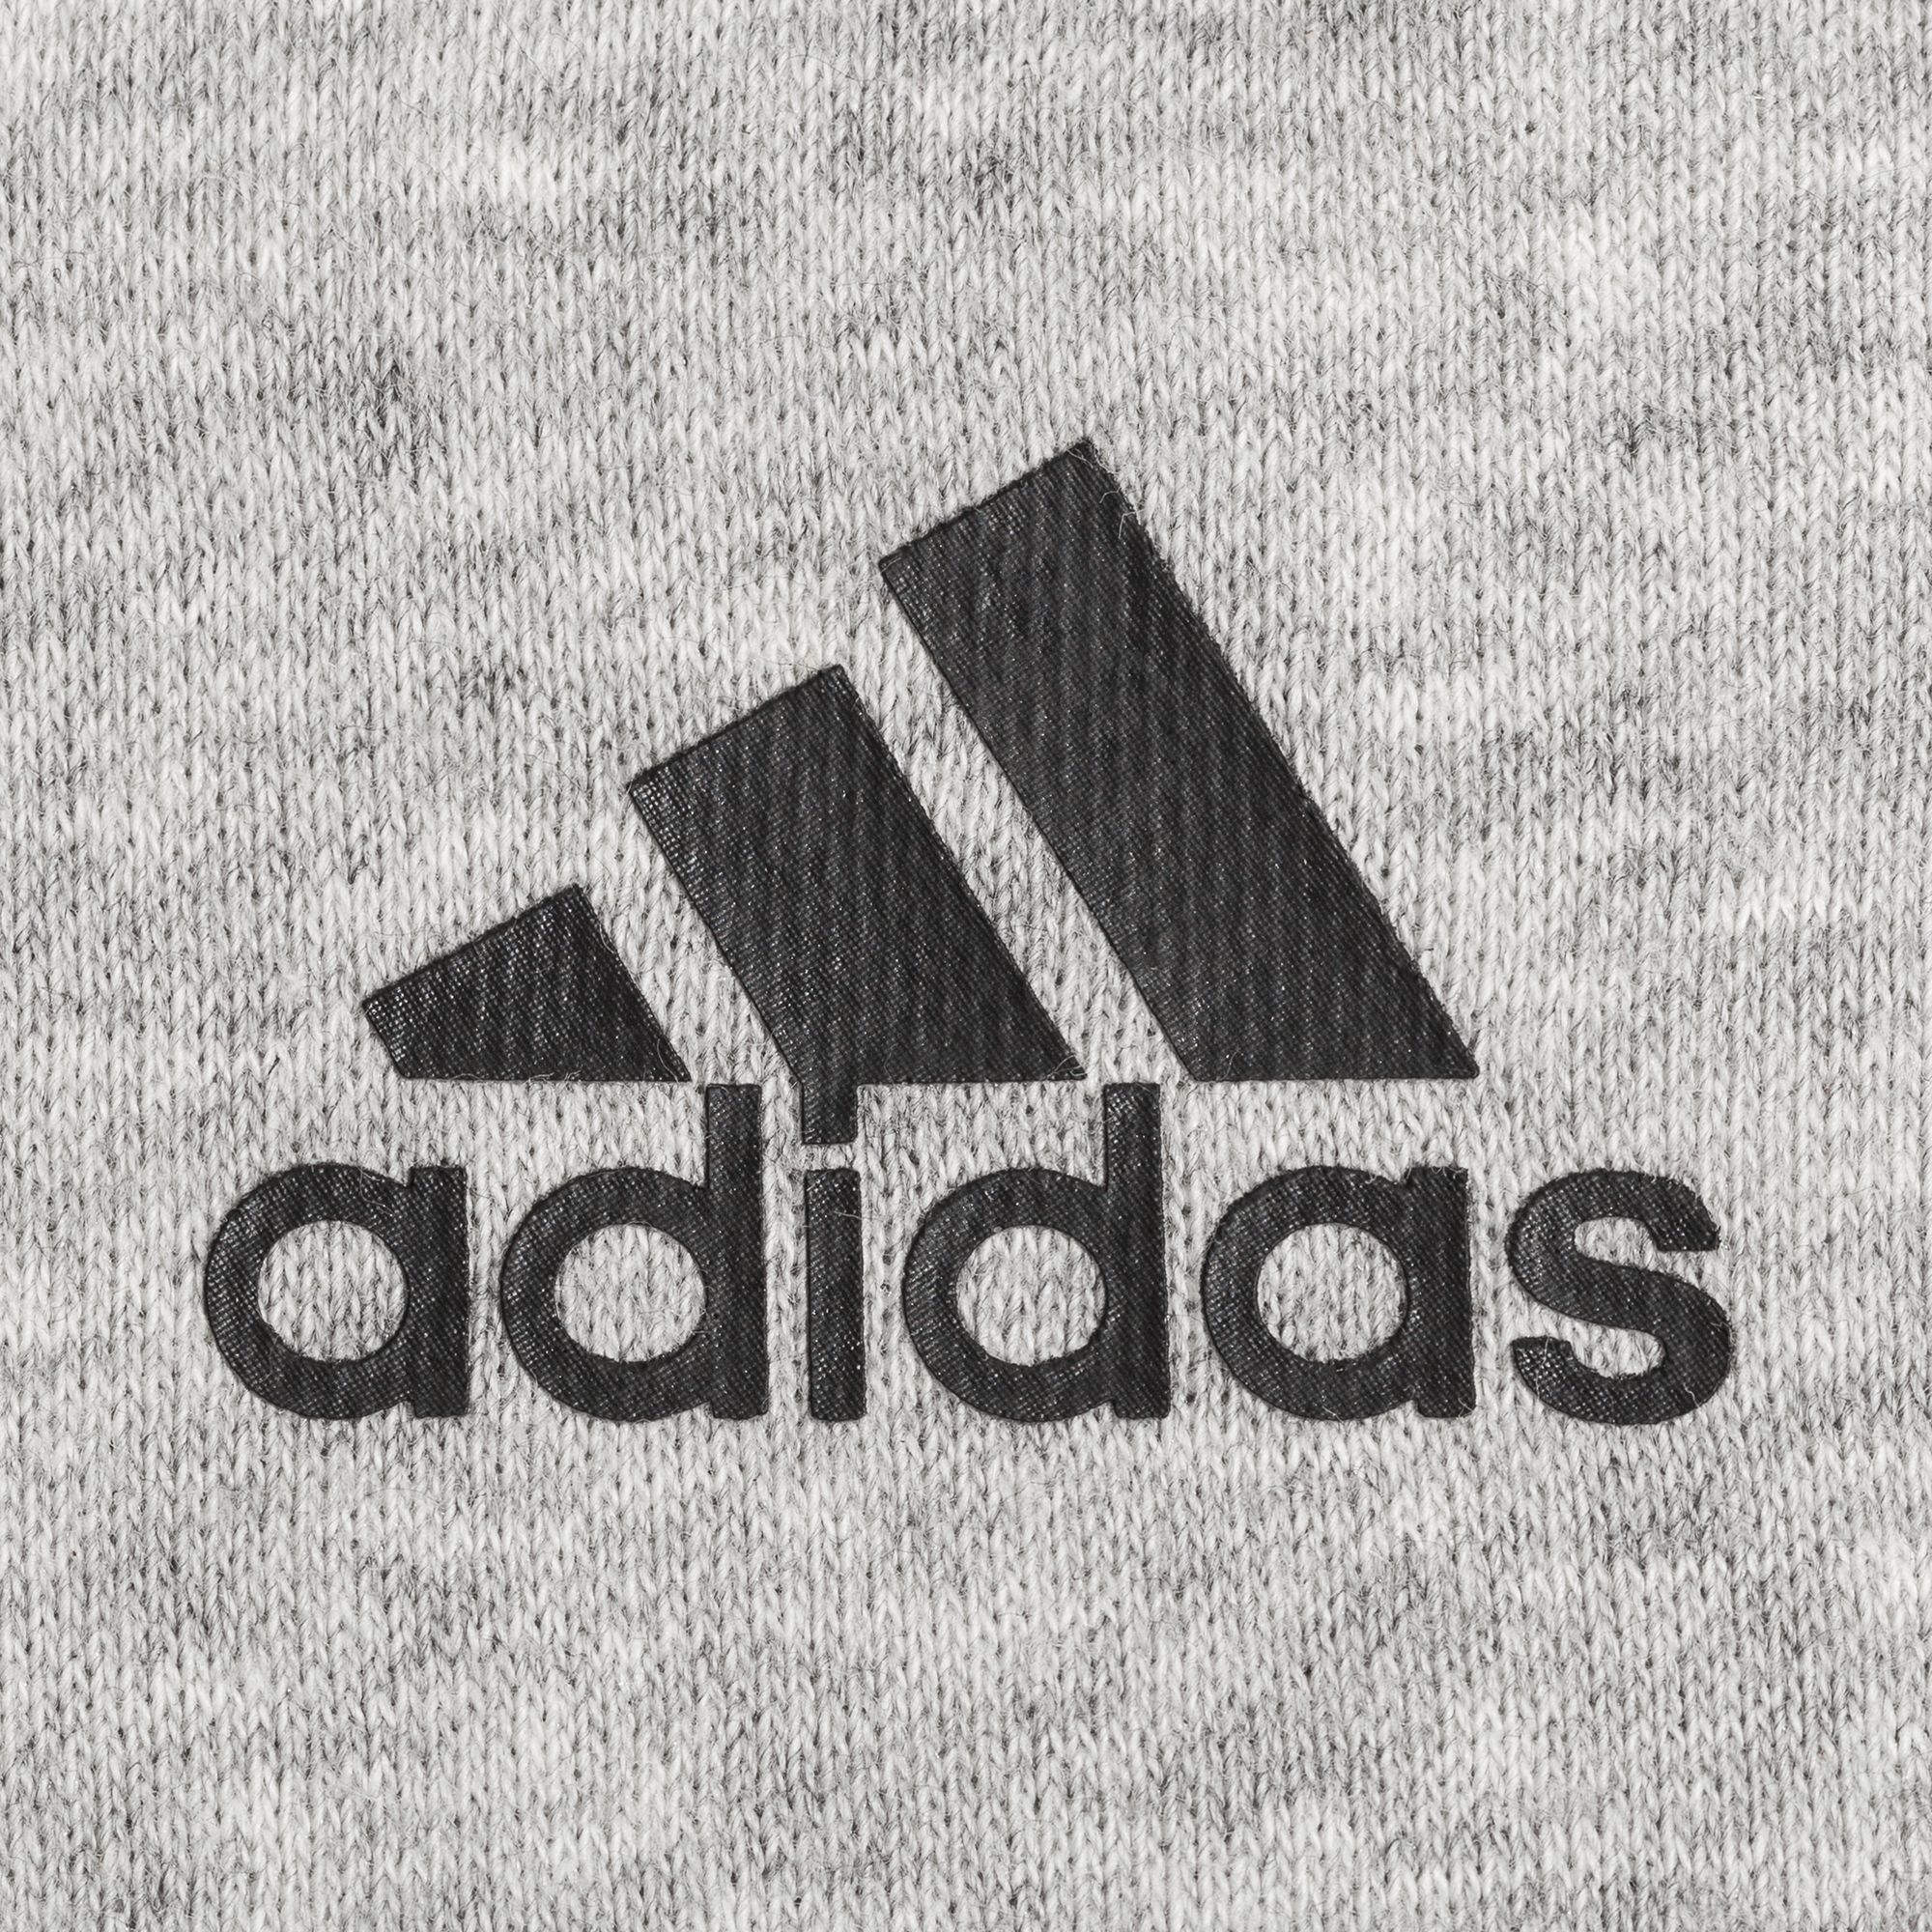 Адидас буквы. Адидас. Фирма адидас. Adidas значок. Адидас бренд логотип.